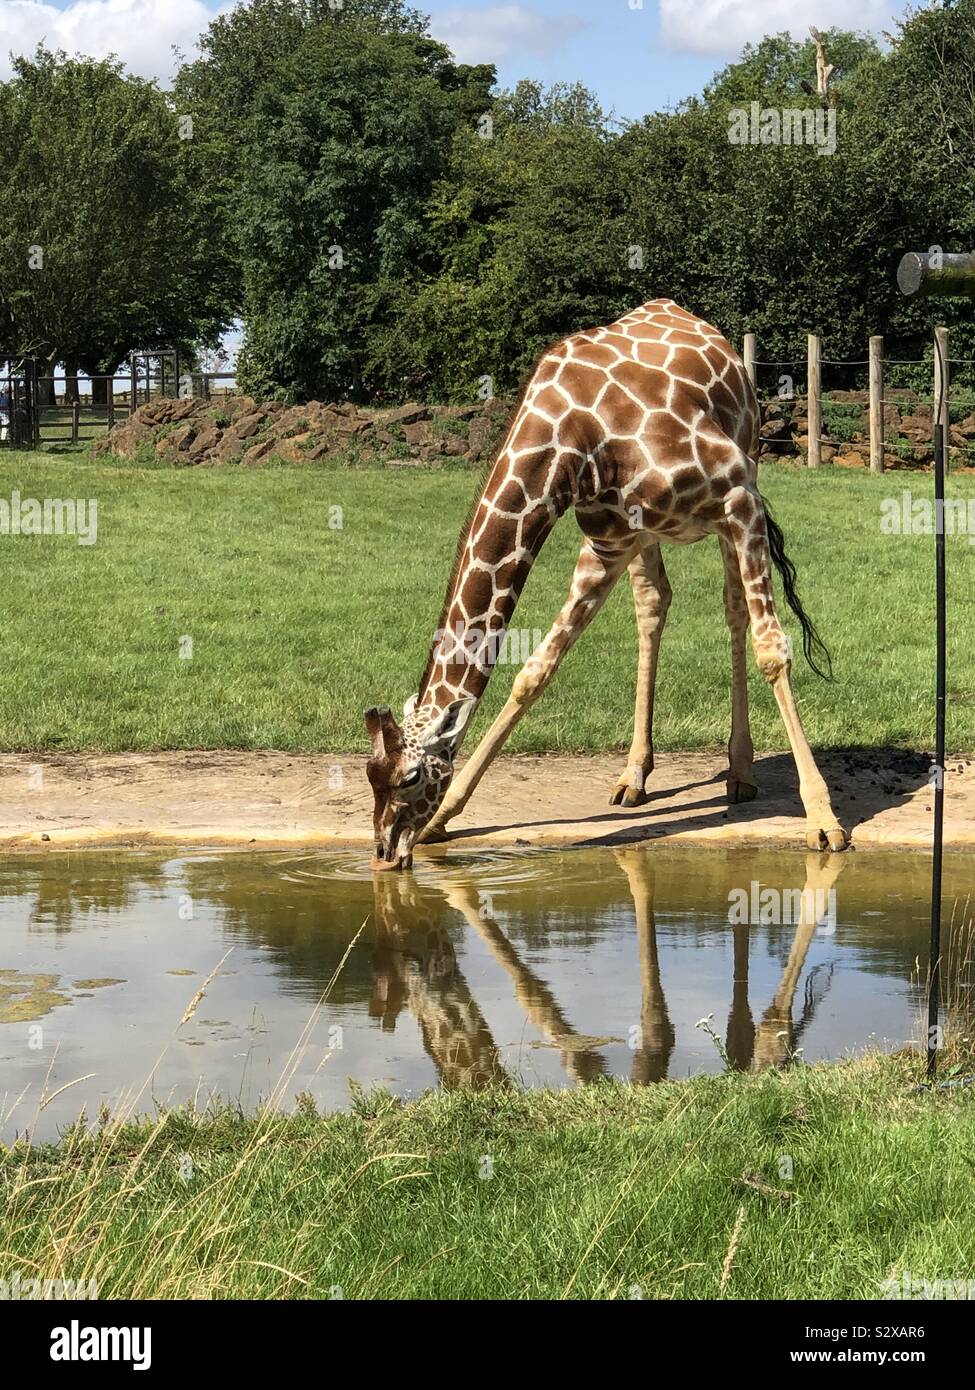 Giraffe drinking from water pool. Stock Photo